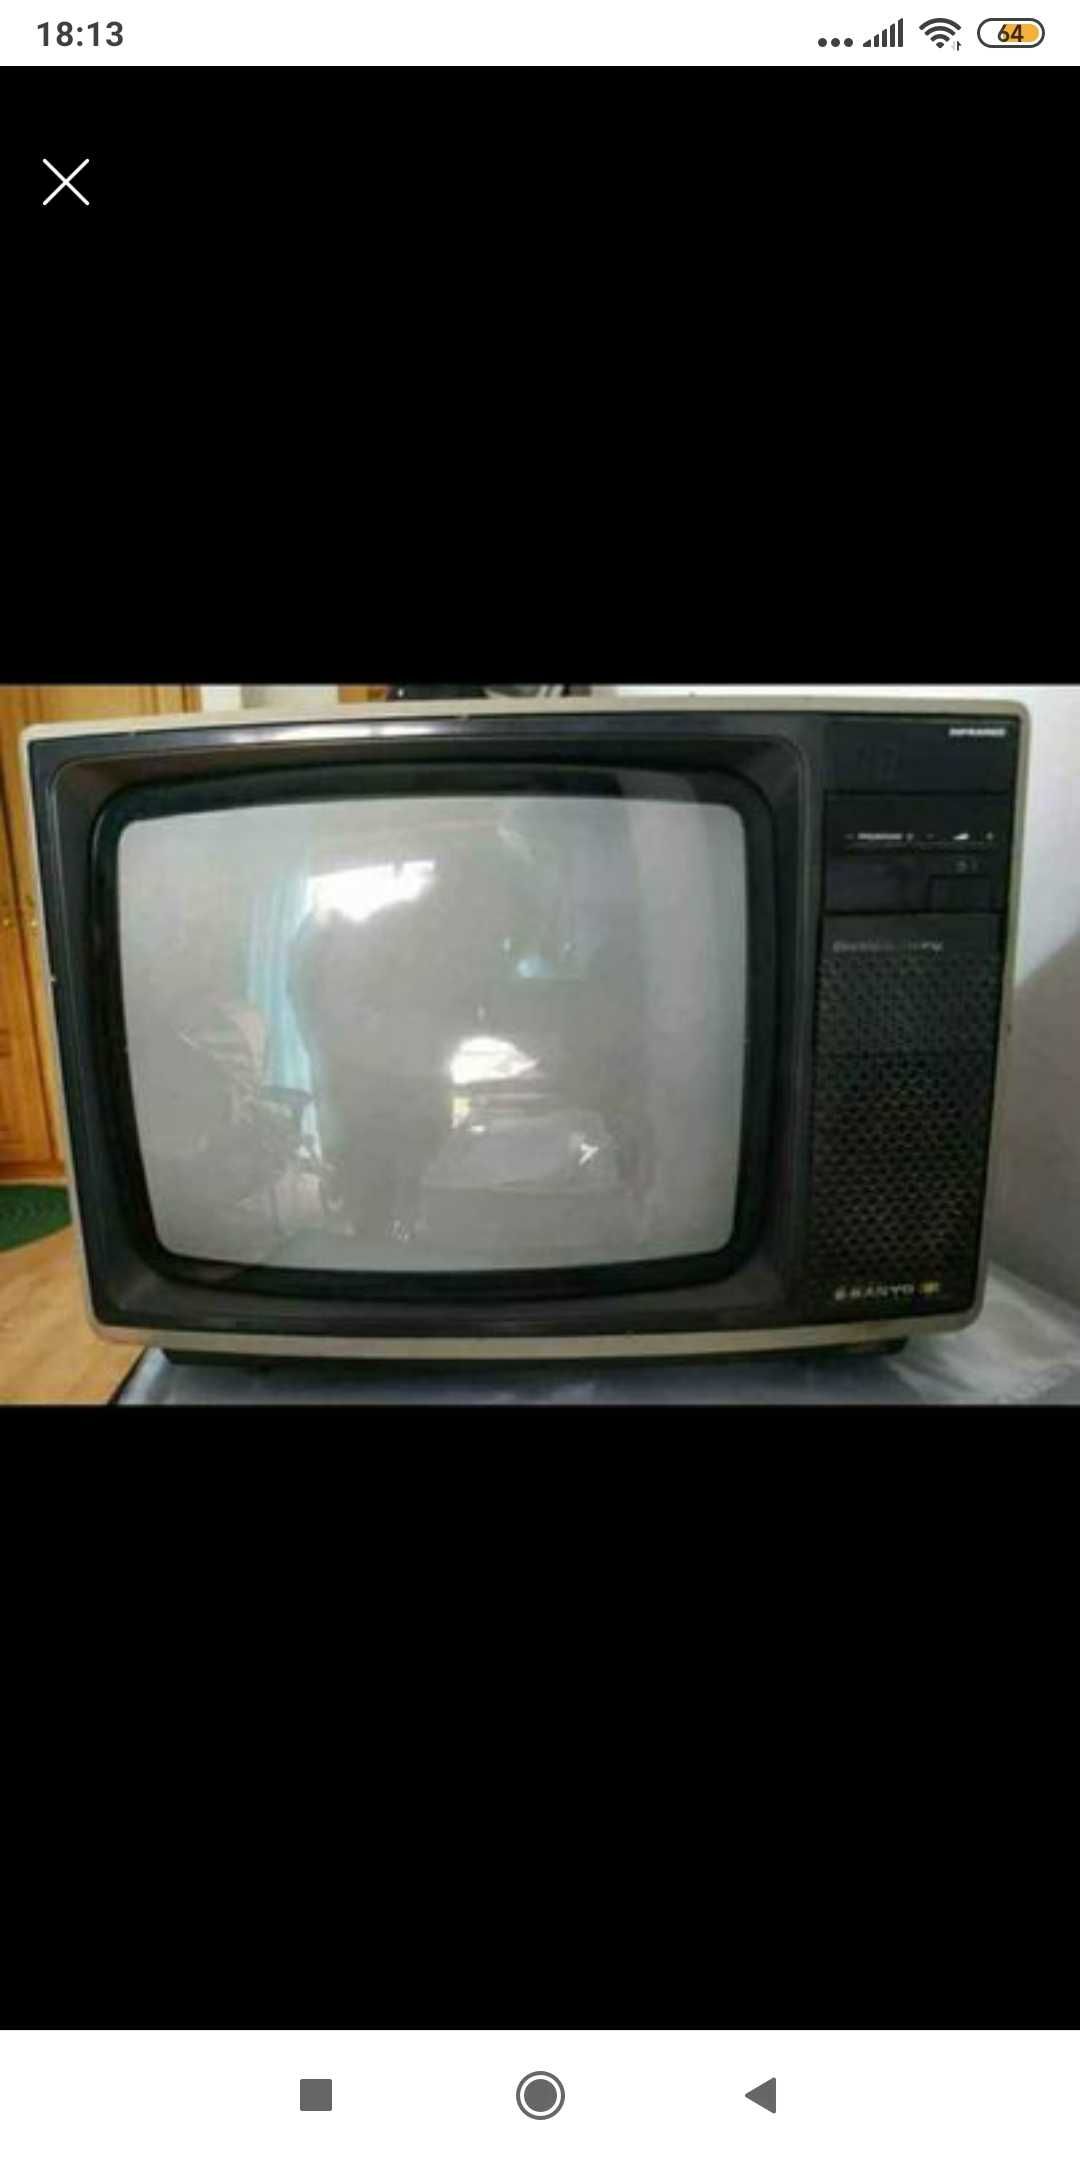 Televisão sanyo (antiga)